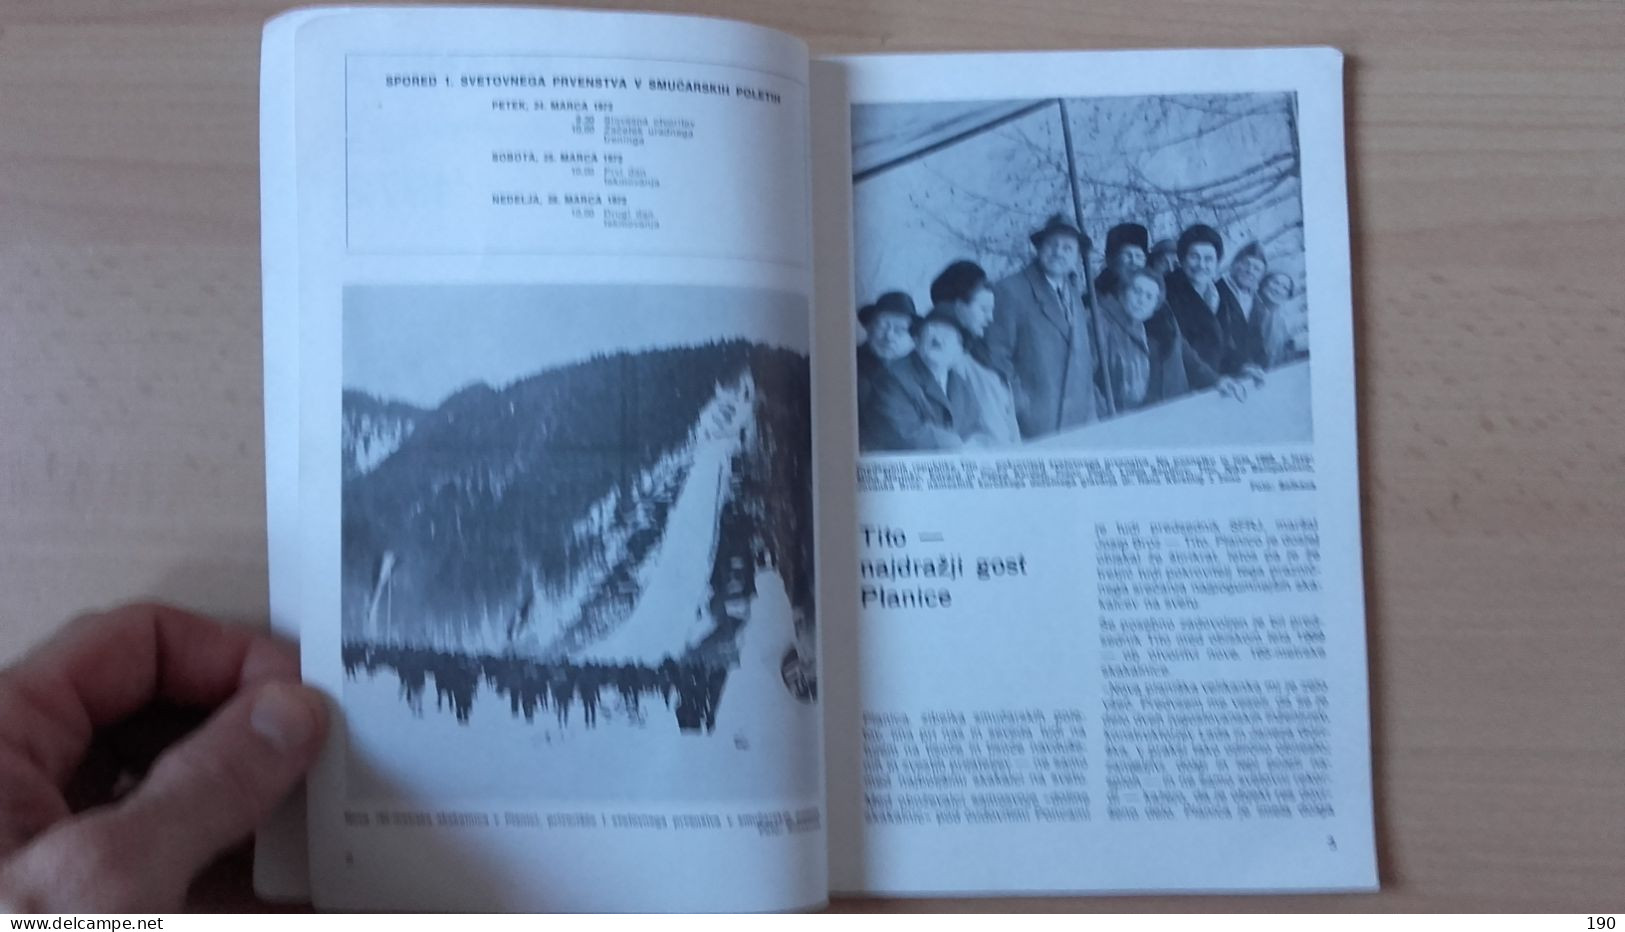 Ski Jumping.FIS.Planica 1934-1972 - Langues Slaves